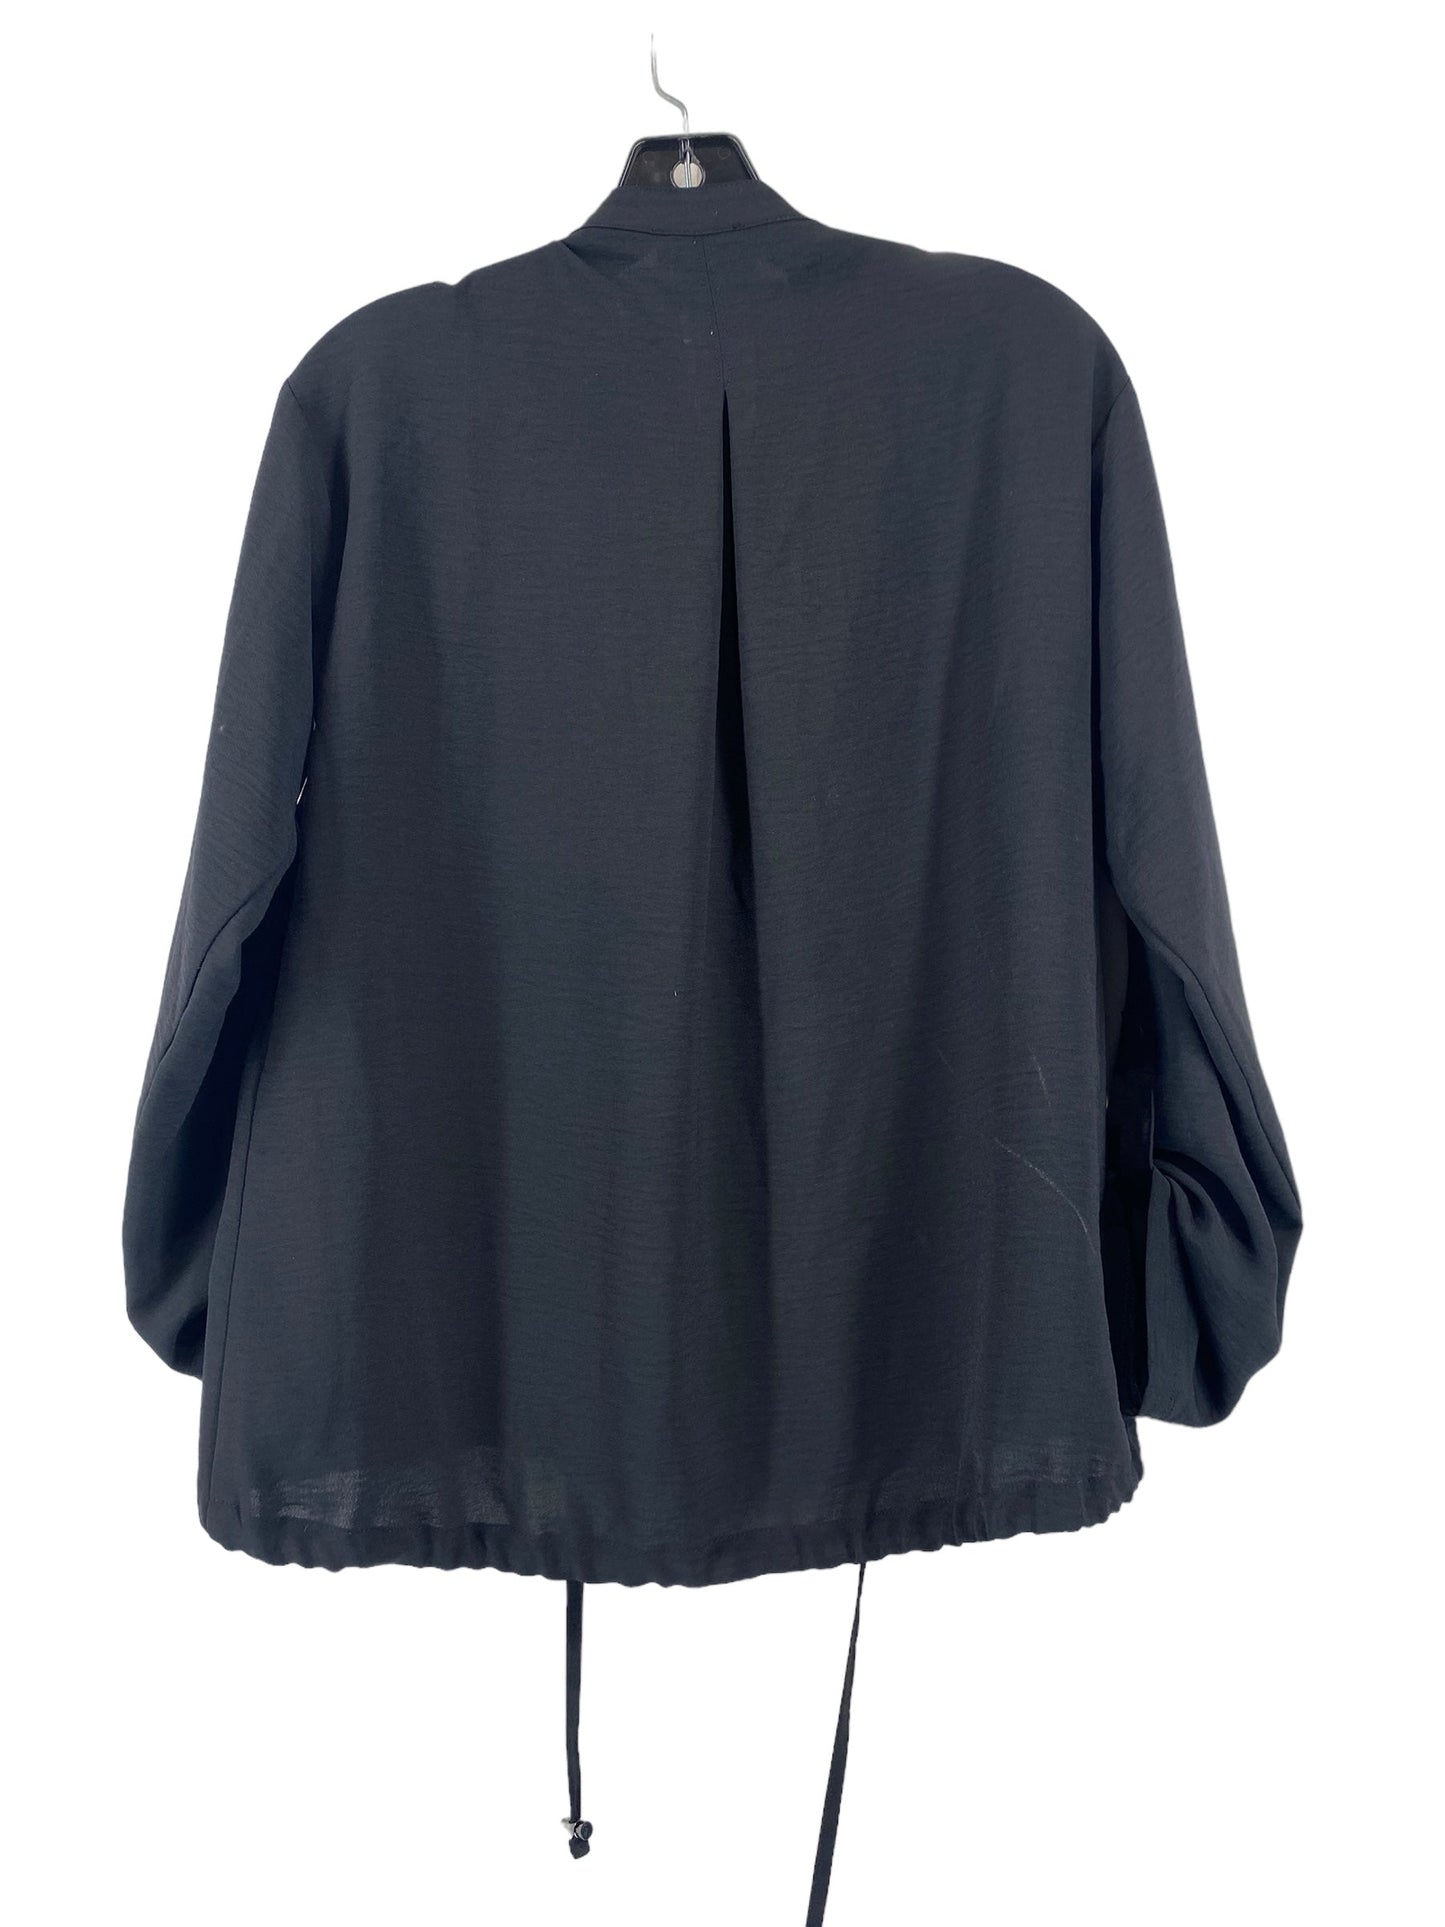 Blouse Long Sleeve By Jones New York  Size: Xs